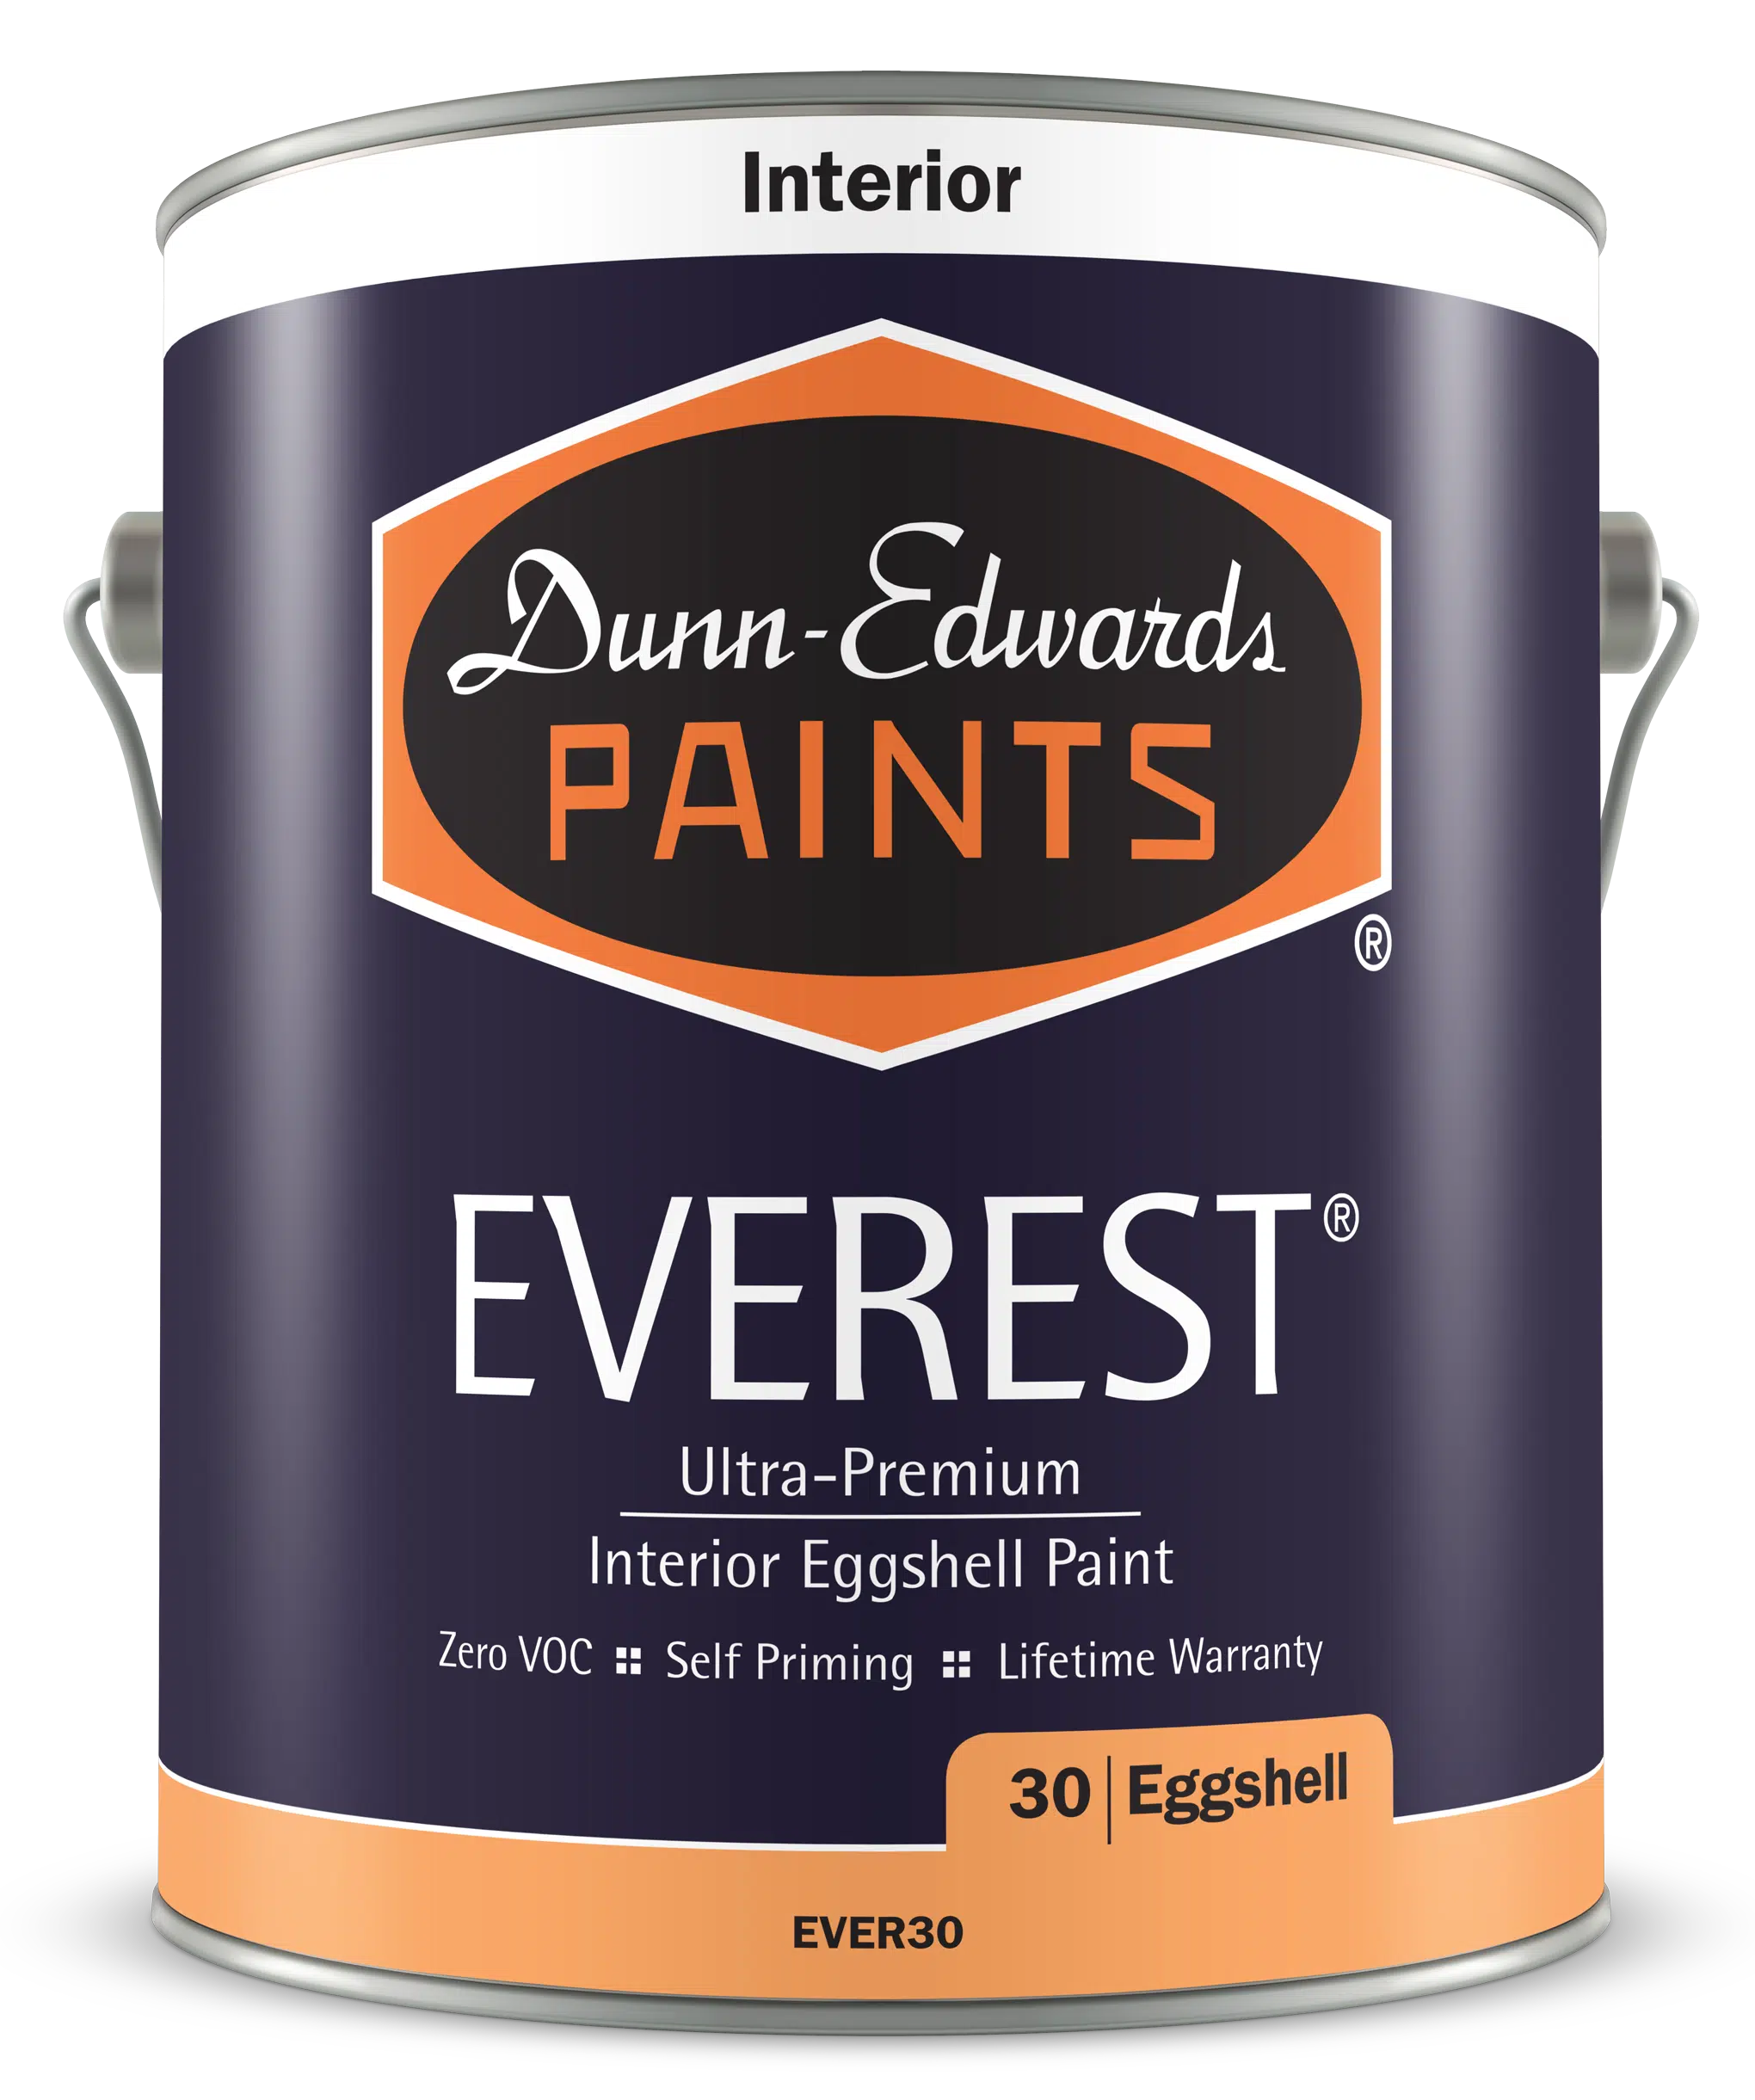 EVEREST Interior Eggshell Paint Can